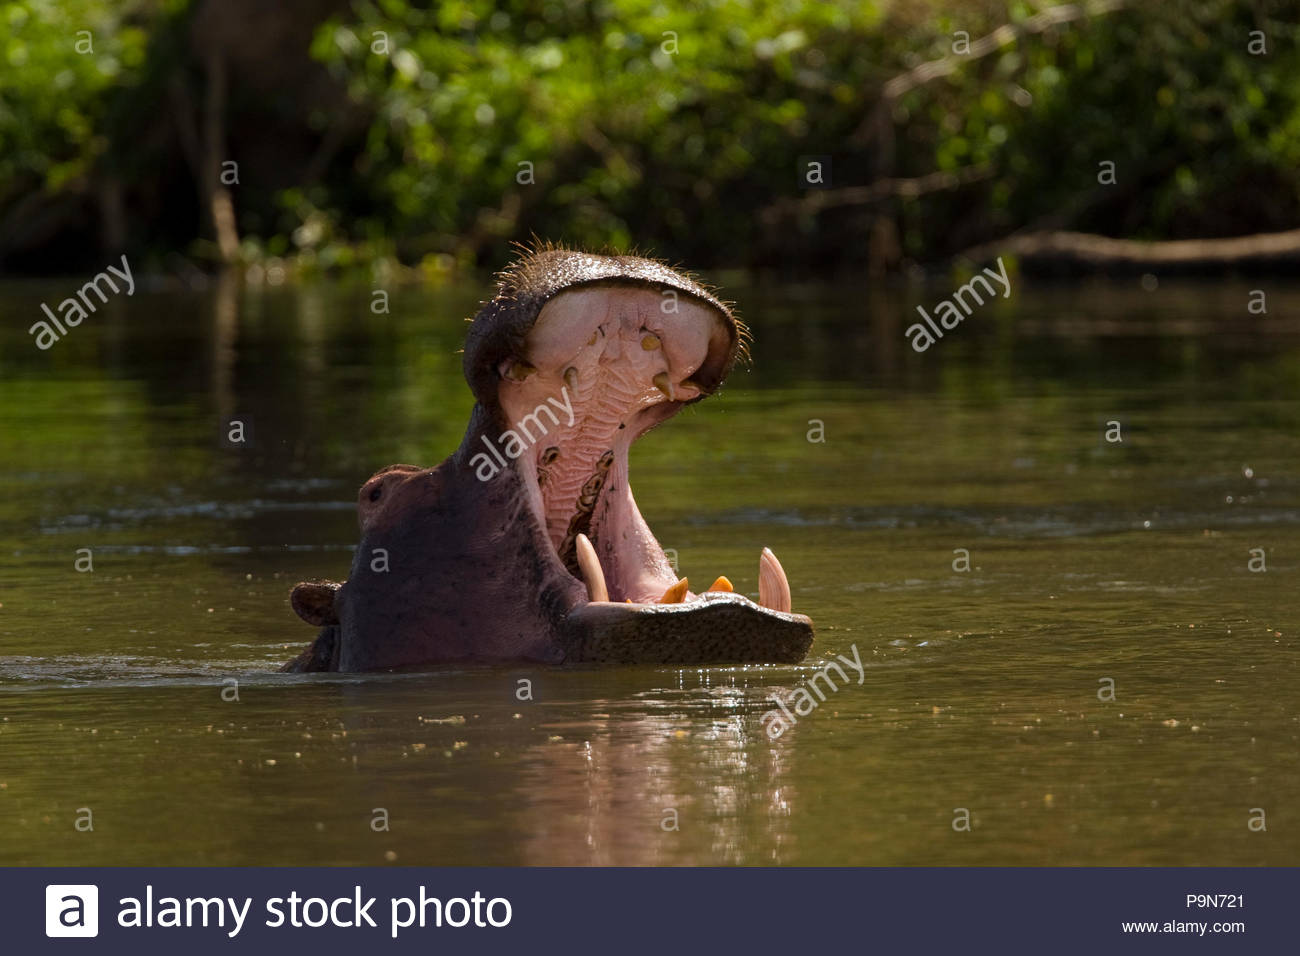 A hippopotamus, Hippopotamus amphibius, in water with it's mouth open. Stock Photo